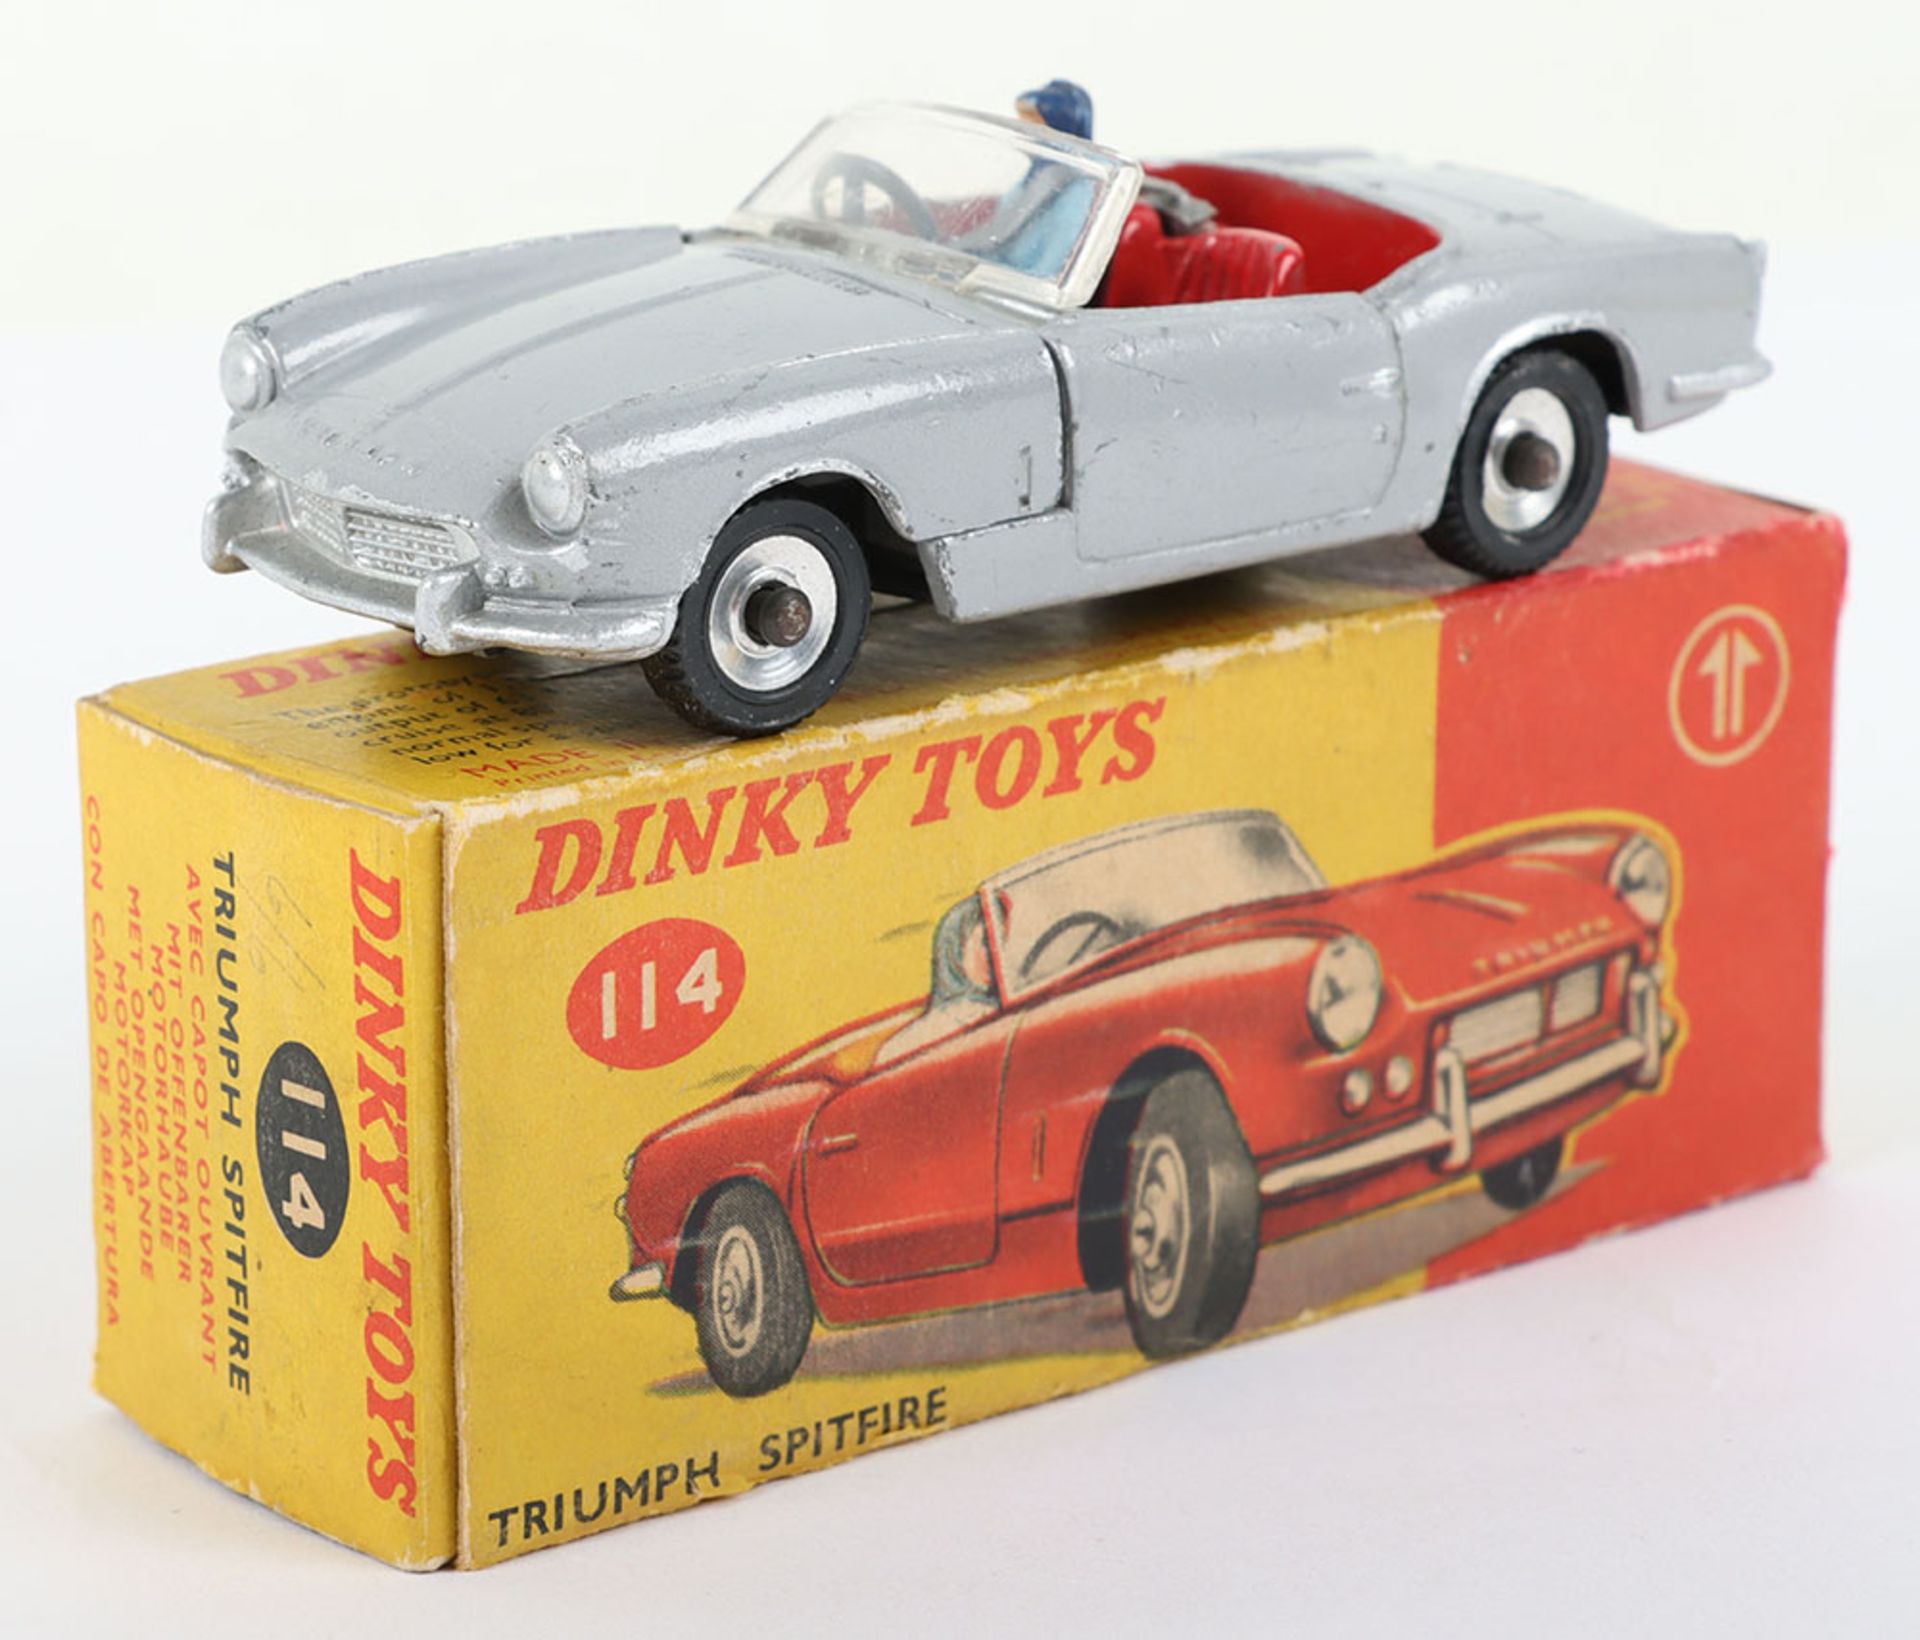 Dinky Toys 114 Triumph Spitfire Car